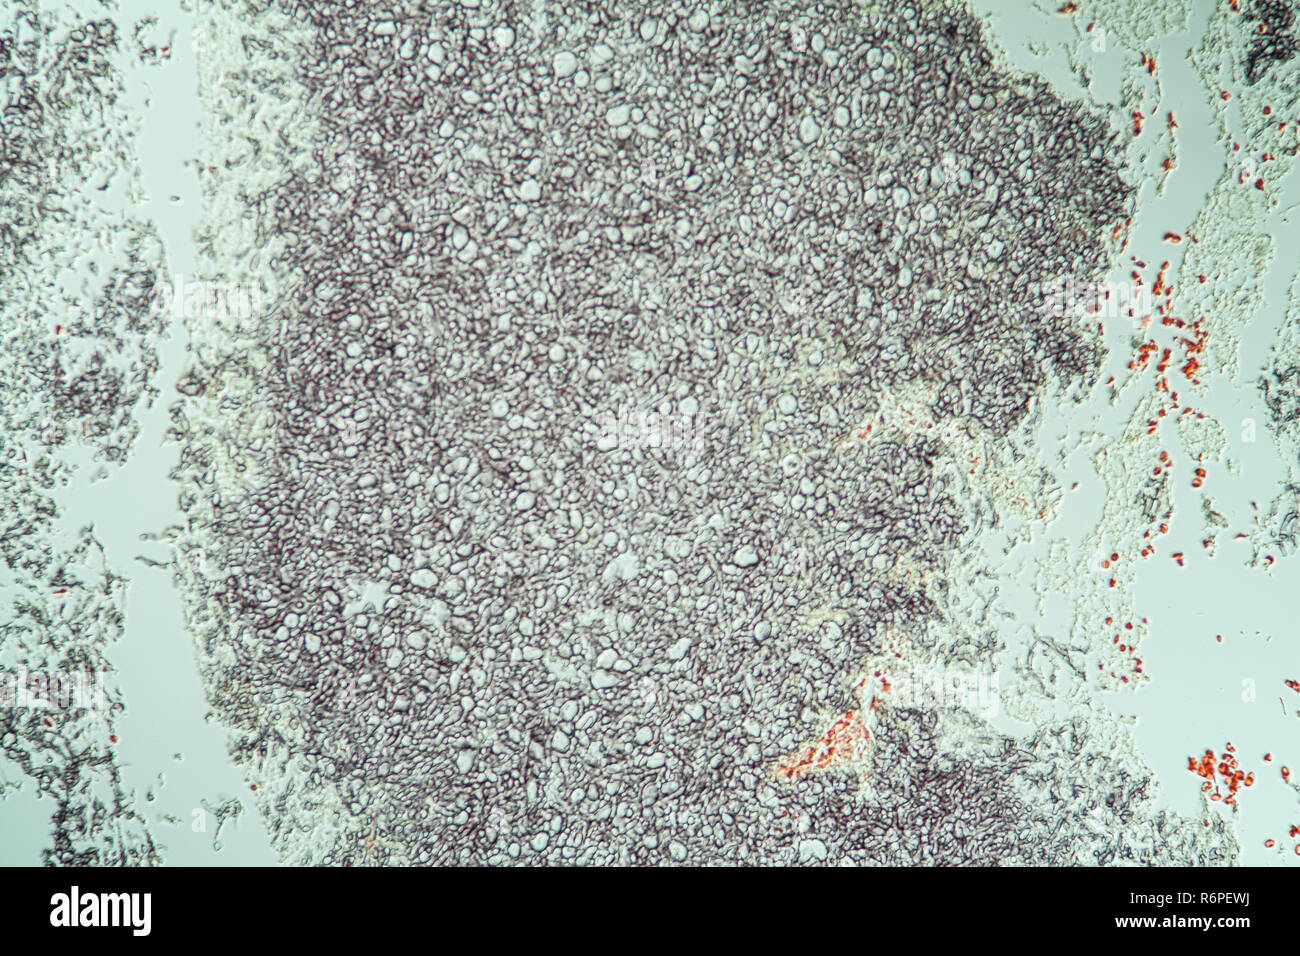 Pathogenic fungi hi-res stock photography and images - Alamy